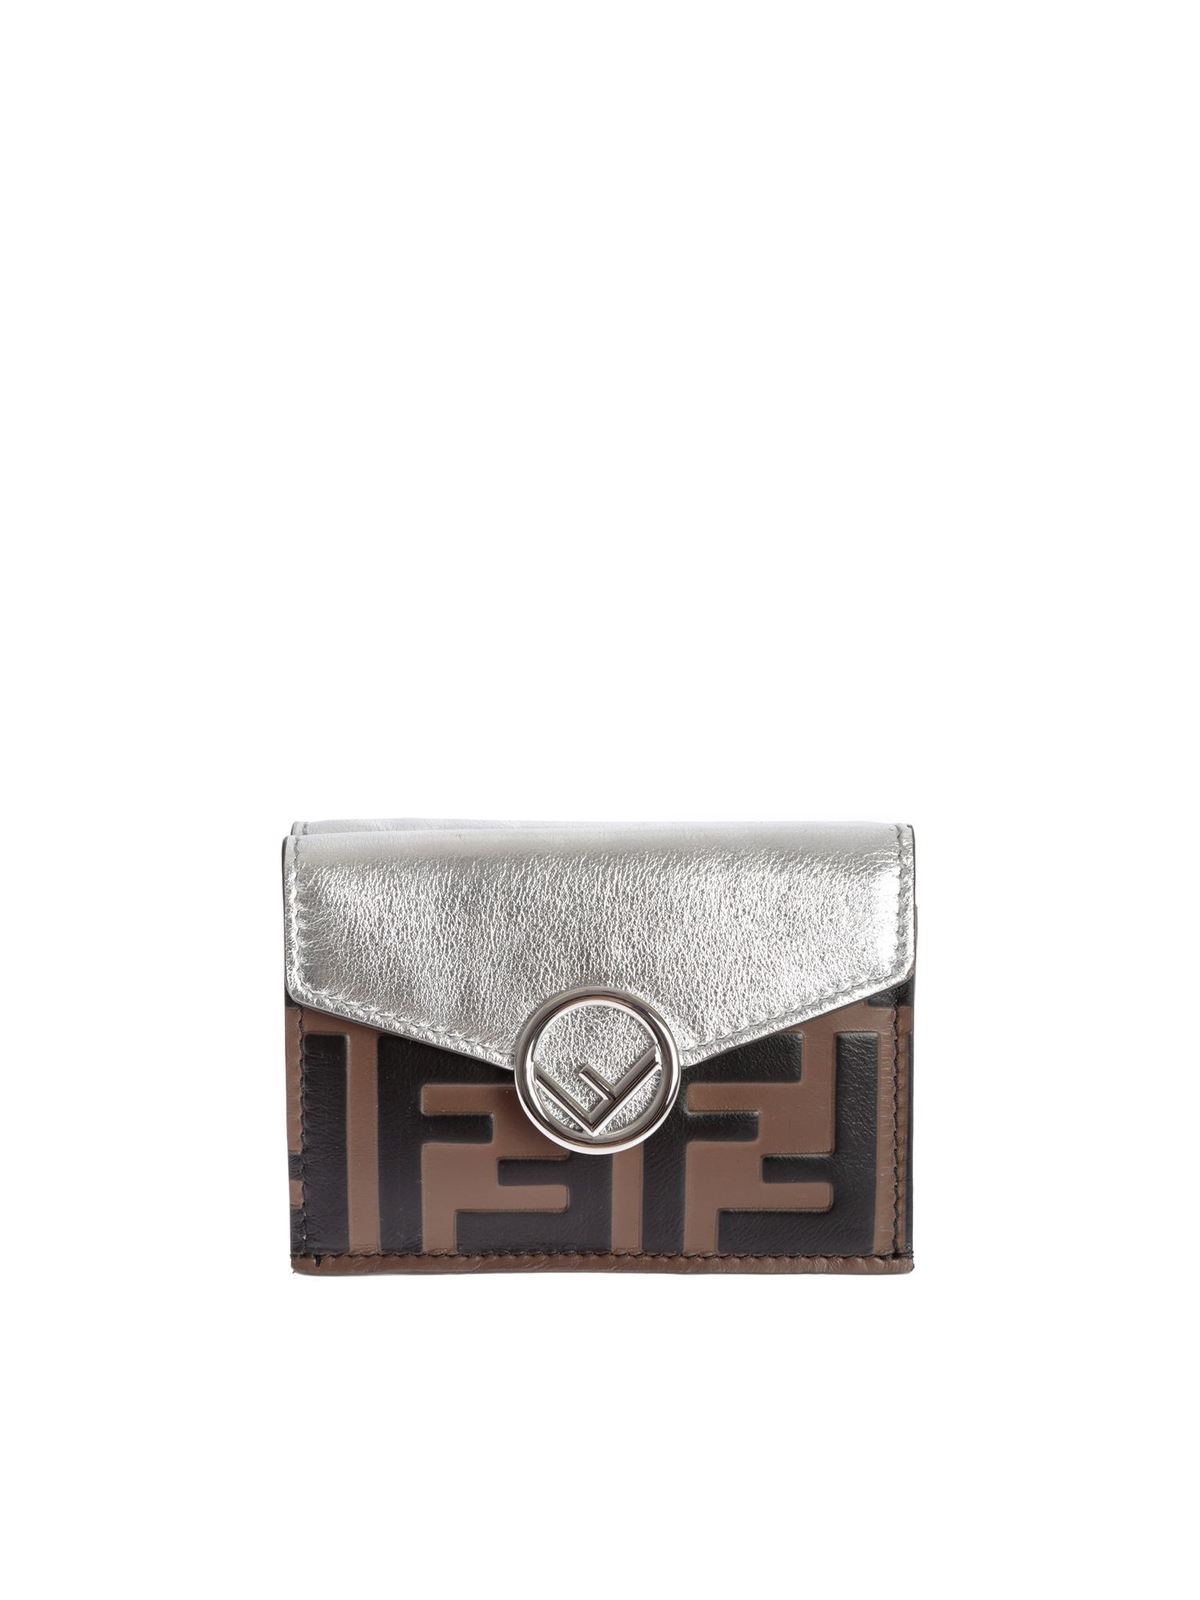 Fendi Micro Trifold Wallet In Silver Color